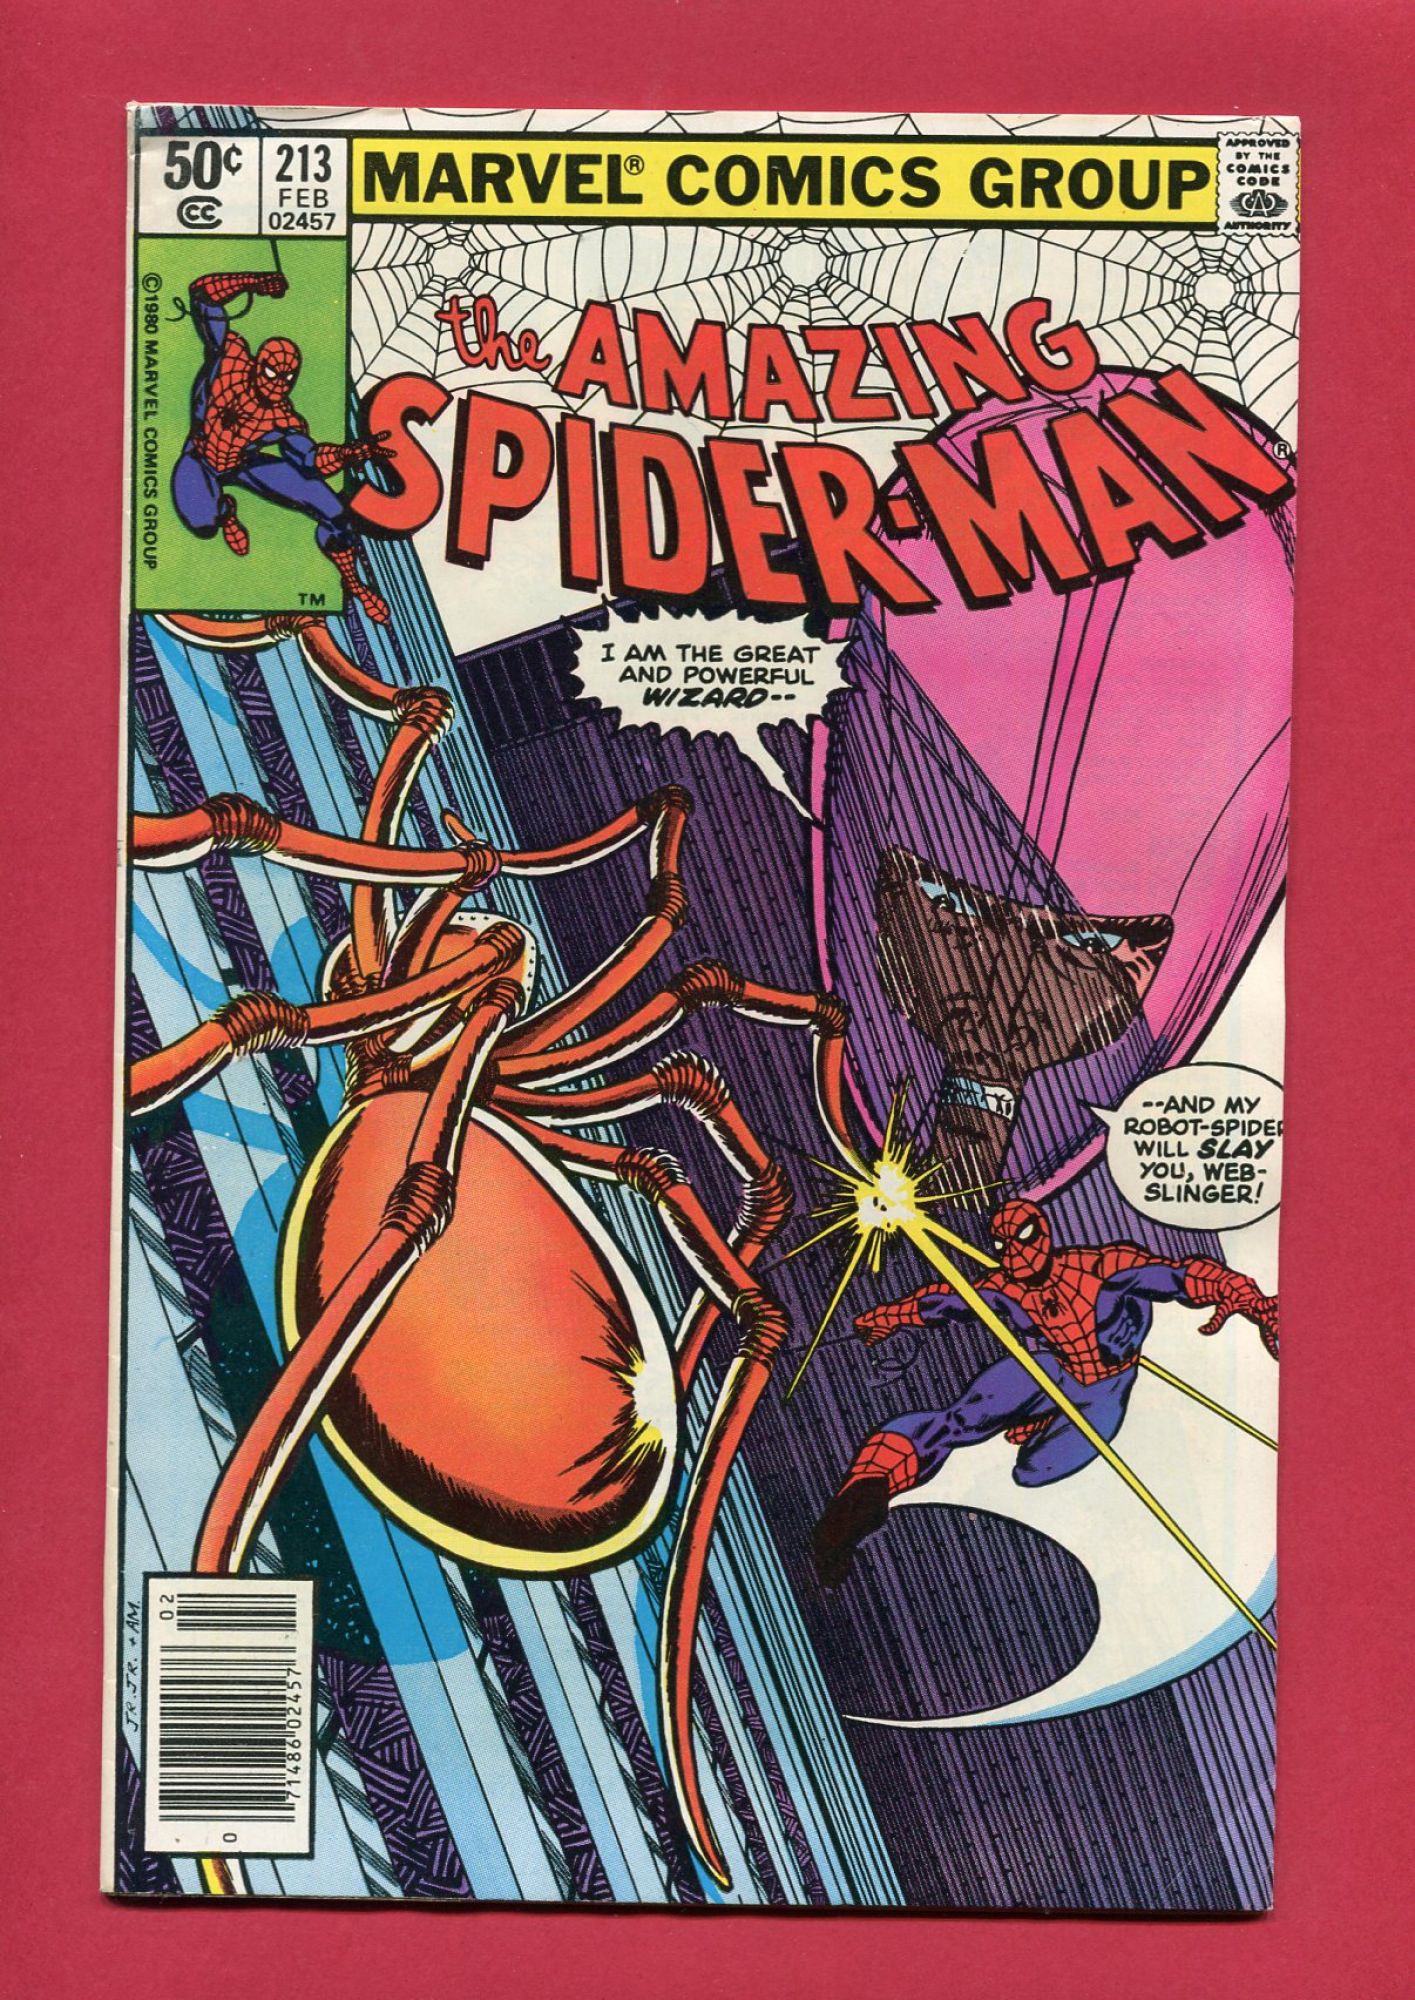 Amazing Spider-Man #213, Feb 1981, 8.0 VF